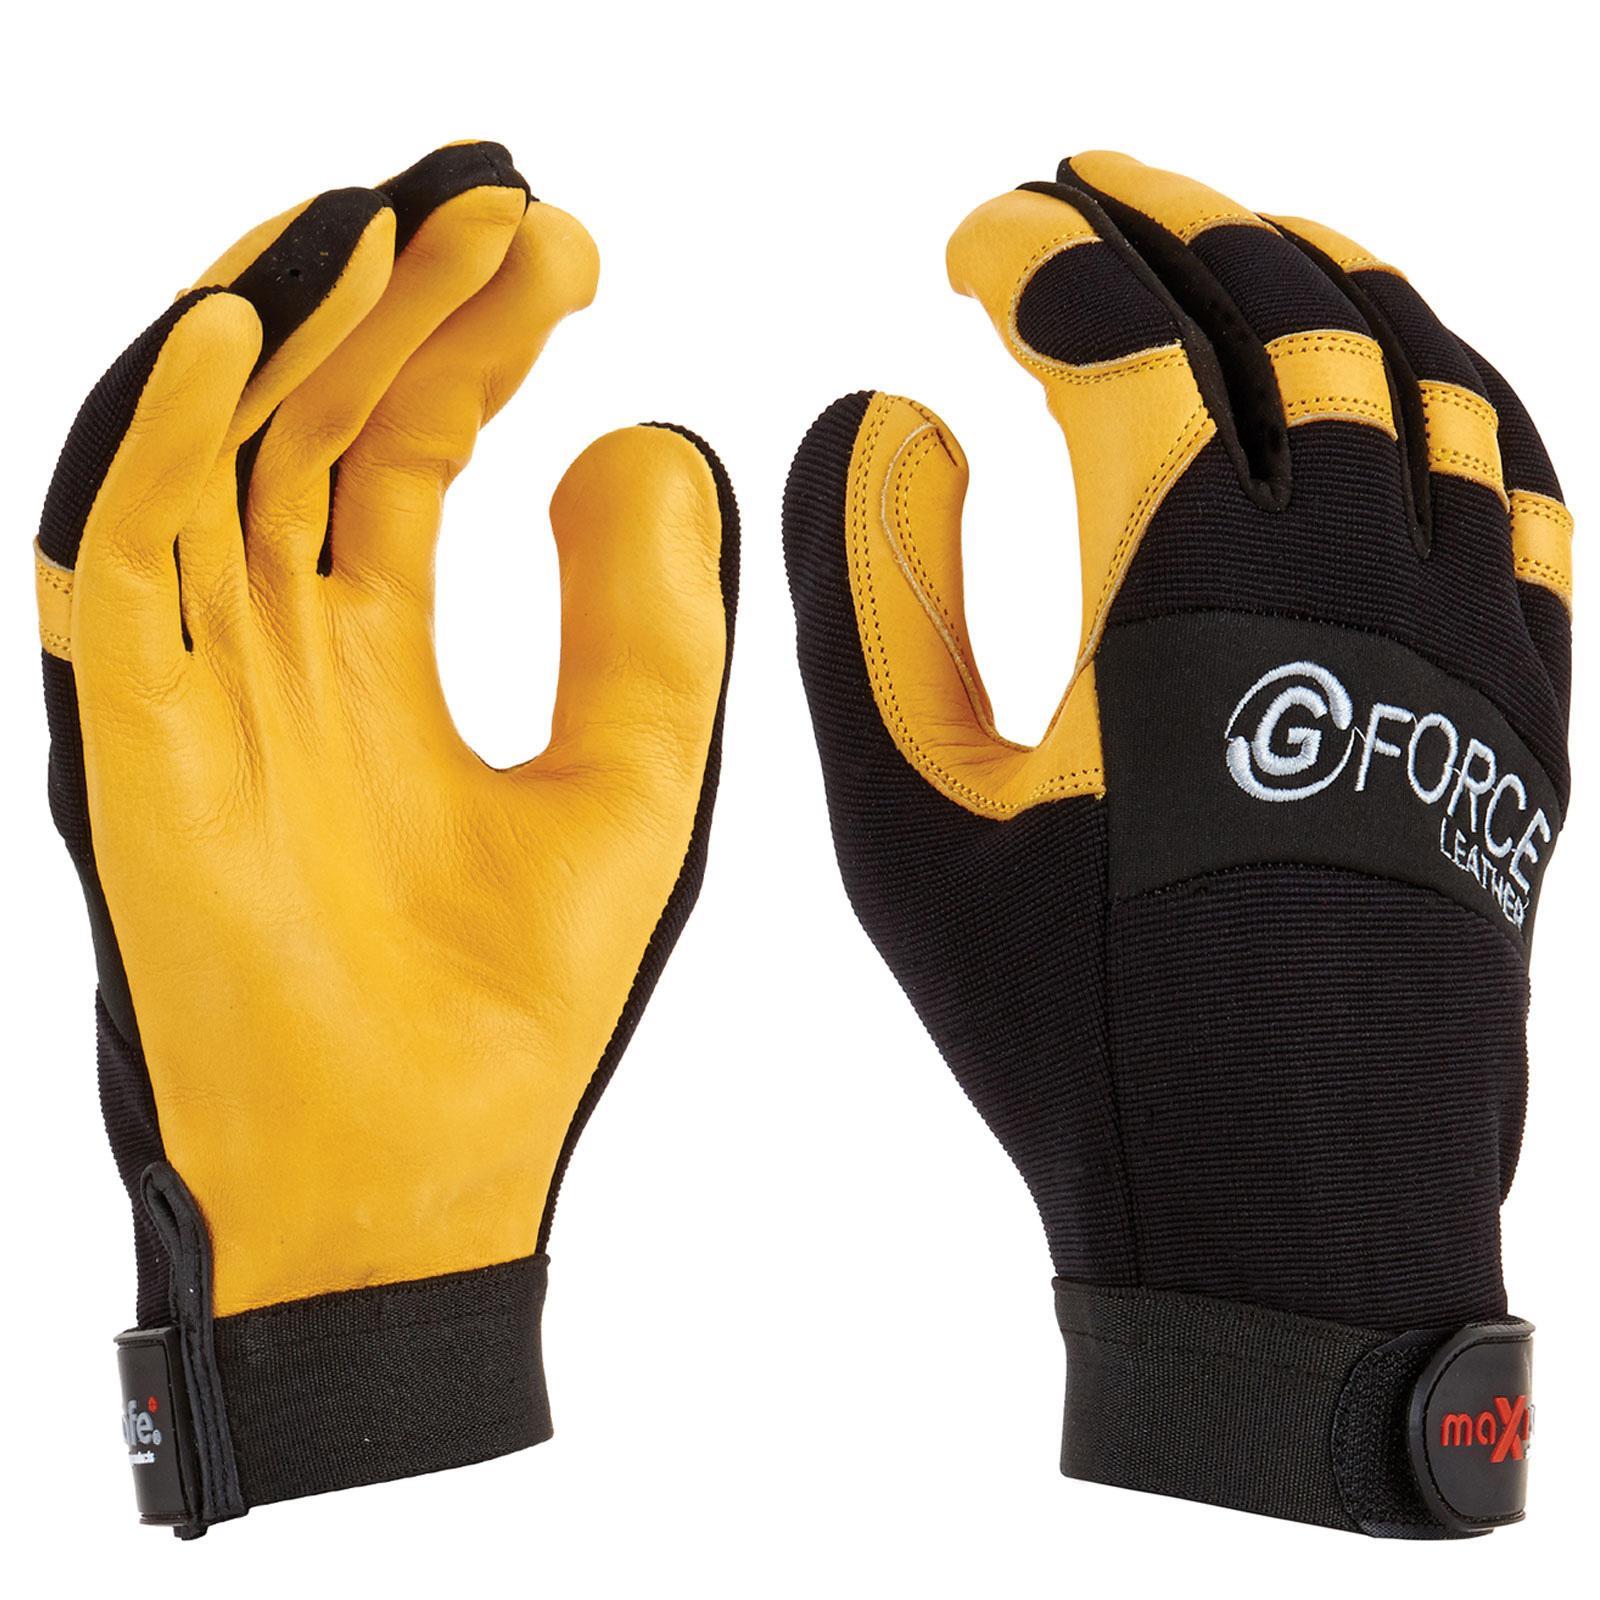 Maxisafe G-Force Leather Mechanics Gloves w/ Leather Palm - XLarge